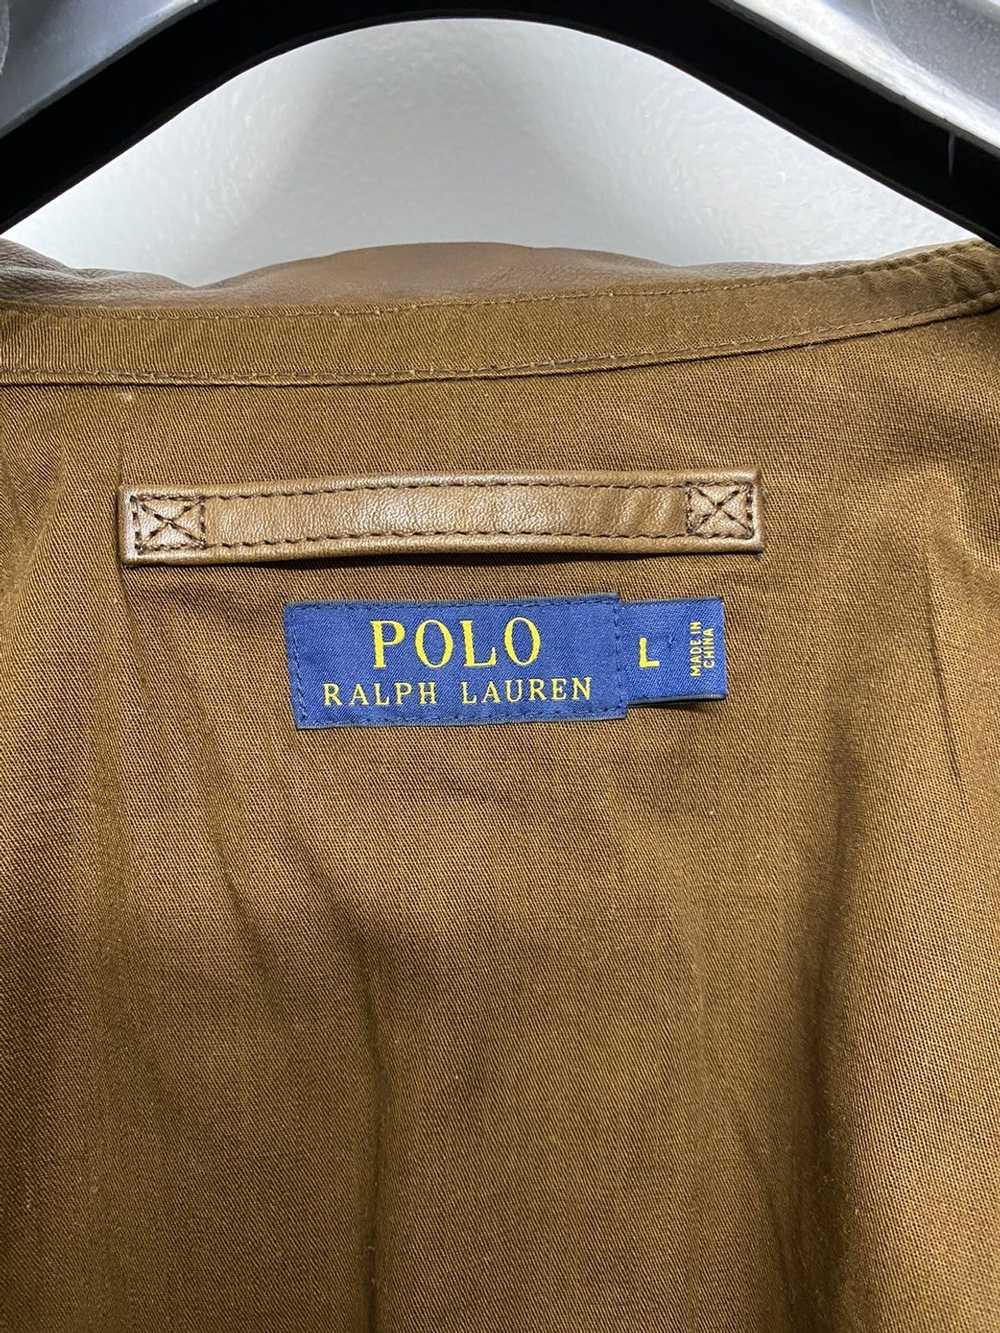 Polo Ralph Lauren Ralph Lauren Polo A2 Brown Leat… - image 7